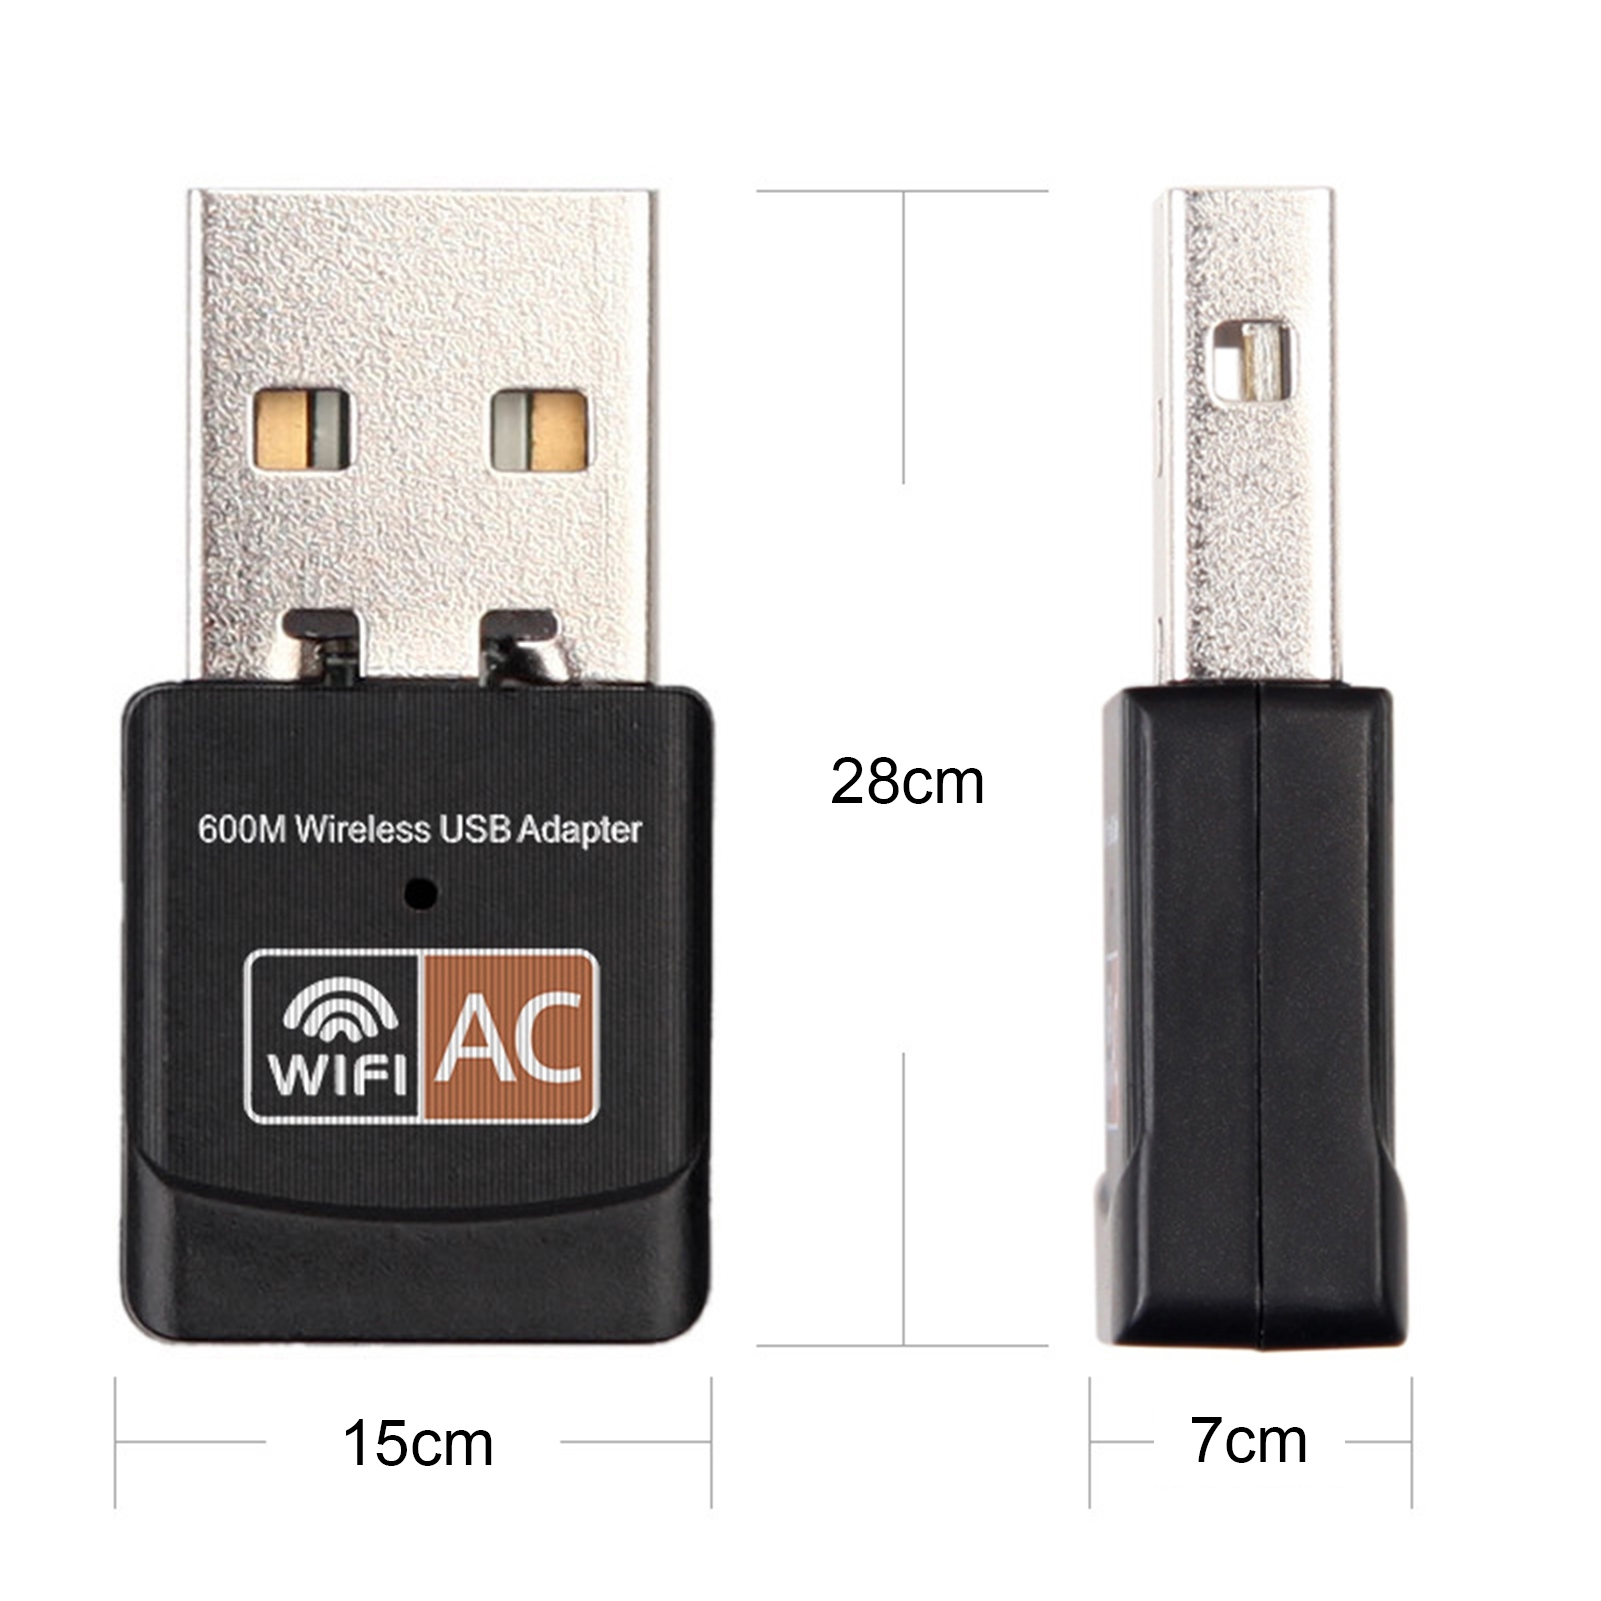 Драйвера для usb 2.0 wireless 802.11 n. USB WIFI адаптер 5g. Dual Band USB Adapter 600 драйвер. Ac600 Dual Band Wireless USB Adapter. WIFI AC 600m Wireless USB Adapter 802.11n.